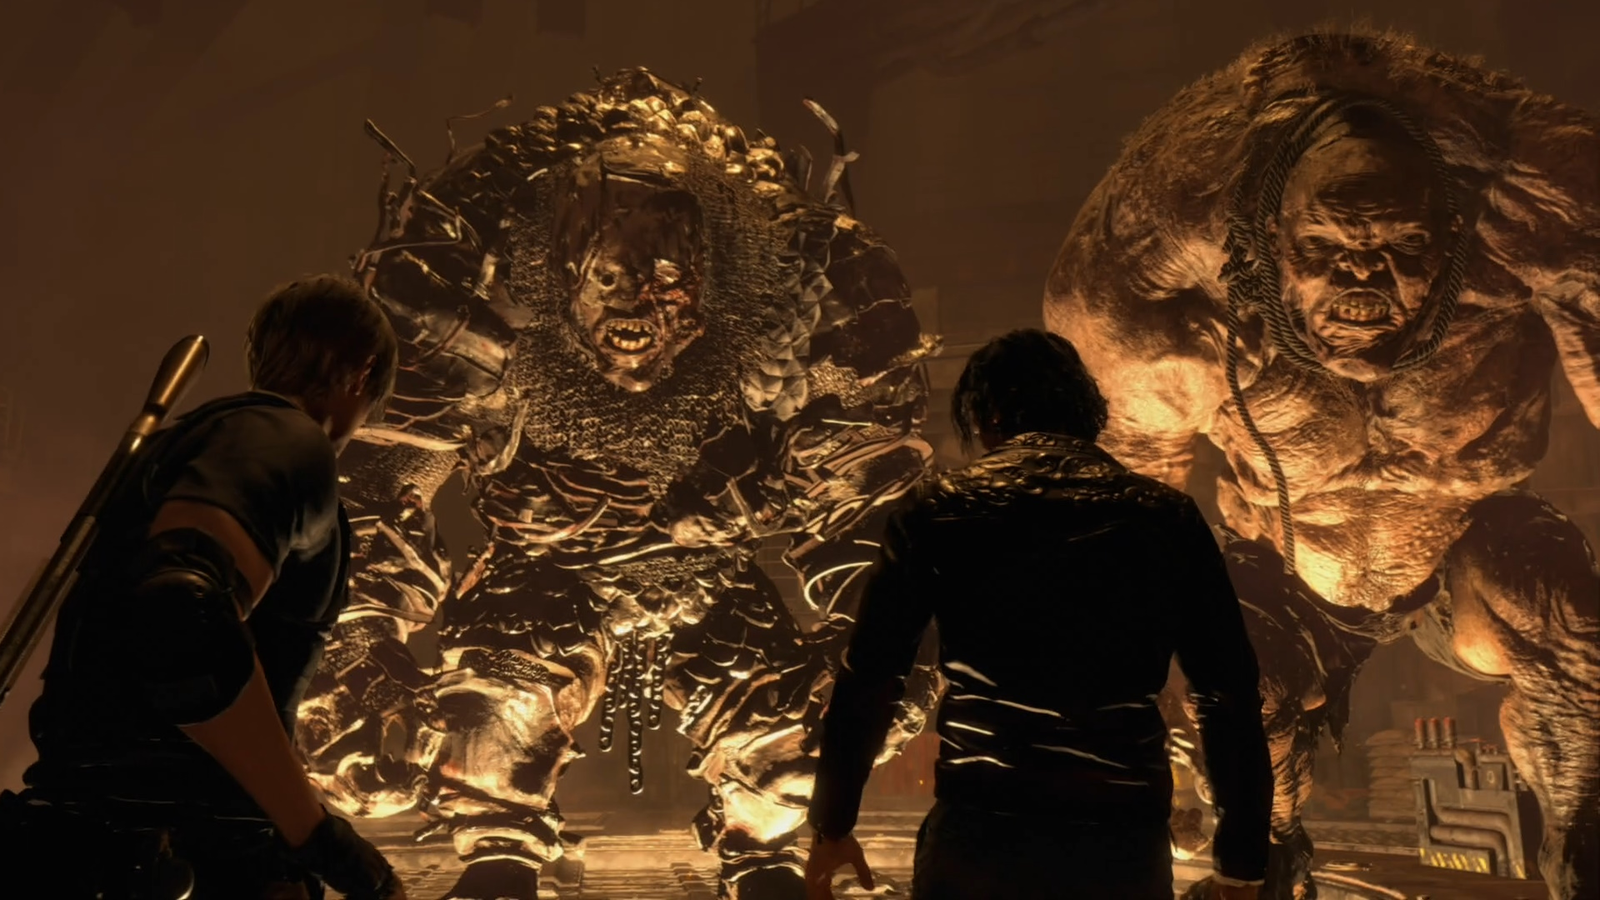 Blast Battle: Qual o melhor Resident Evil para o Wii? - Nintendo Blast